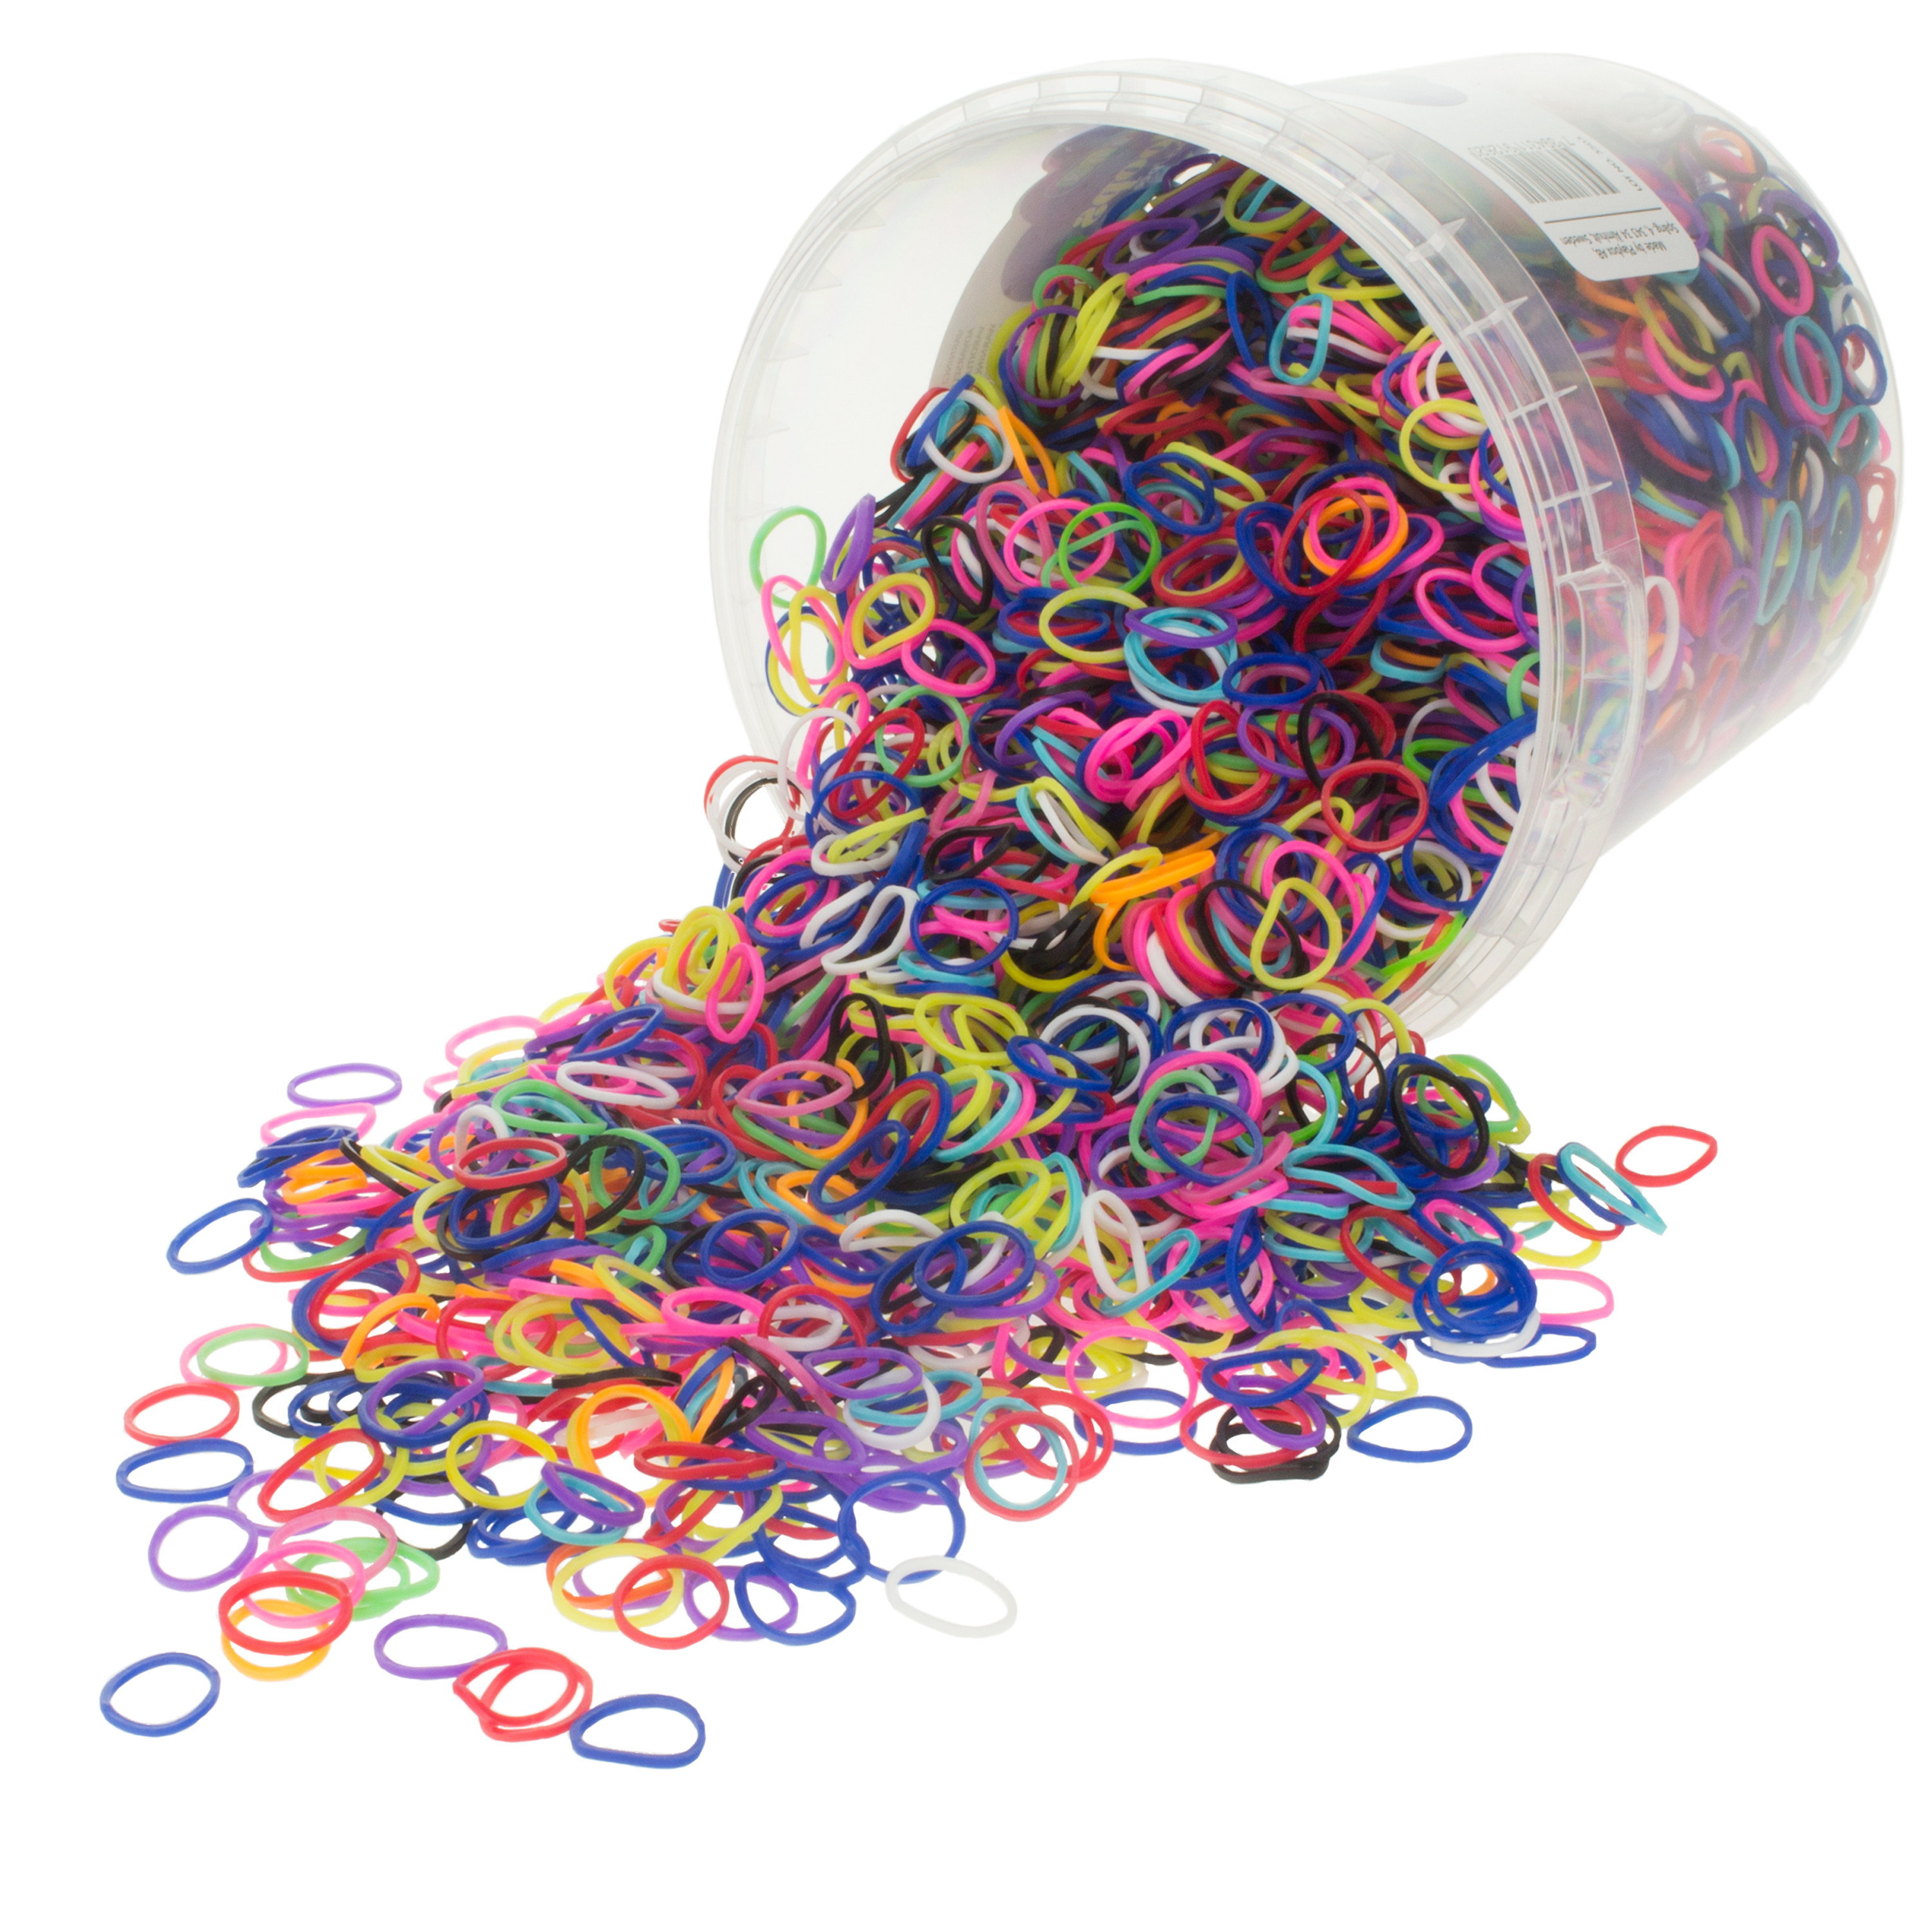 Fancy Loops, Maxi-Pack mit 5000 Loops, farbig sortiert